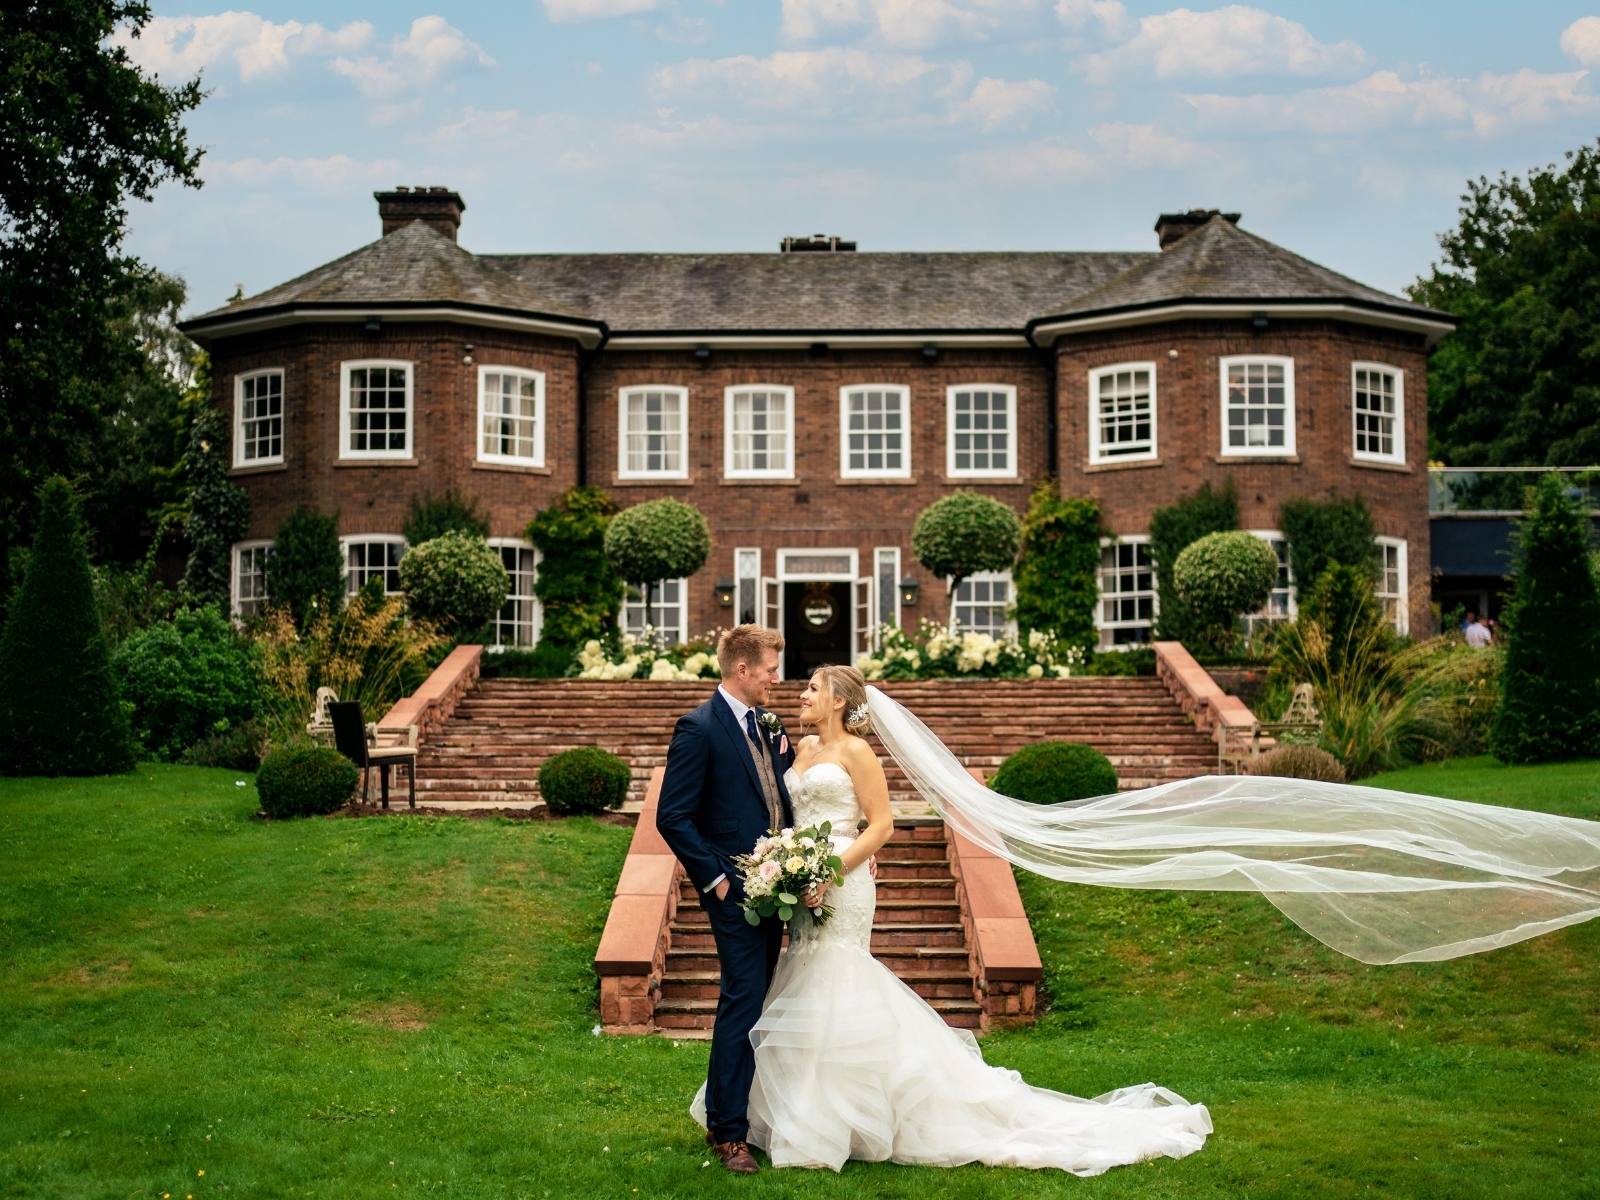 Wedding venues in Cheshire - Delamere Manor